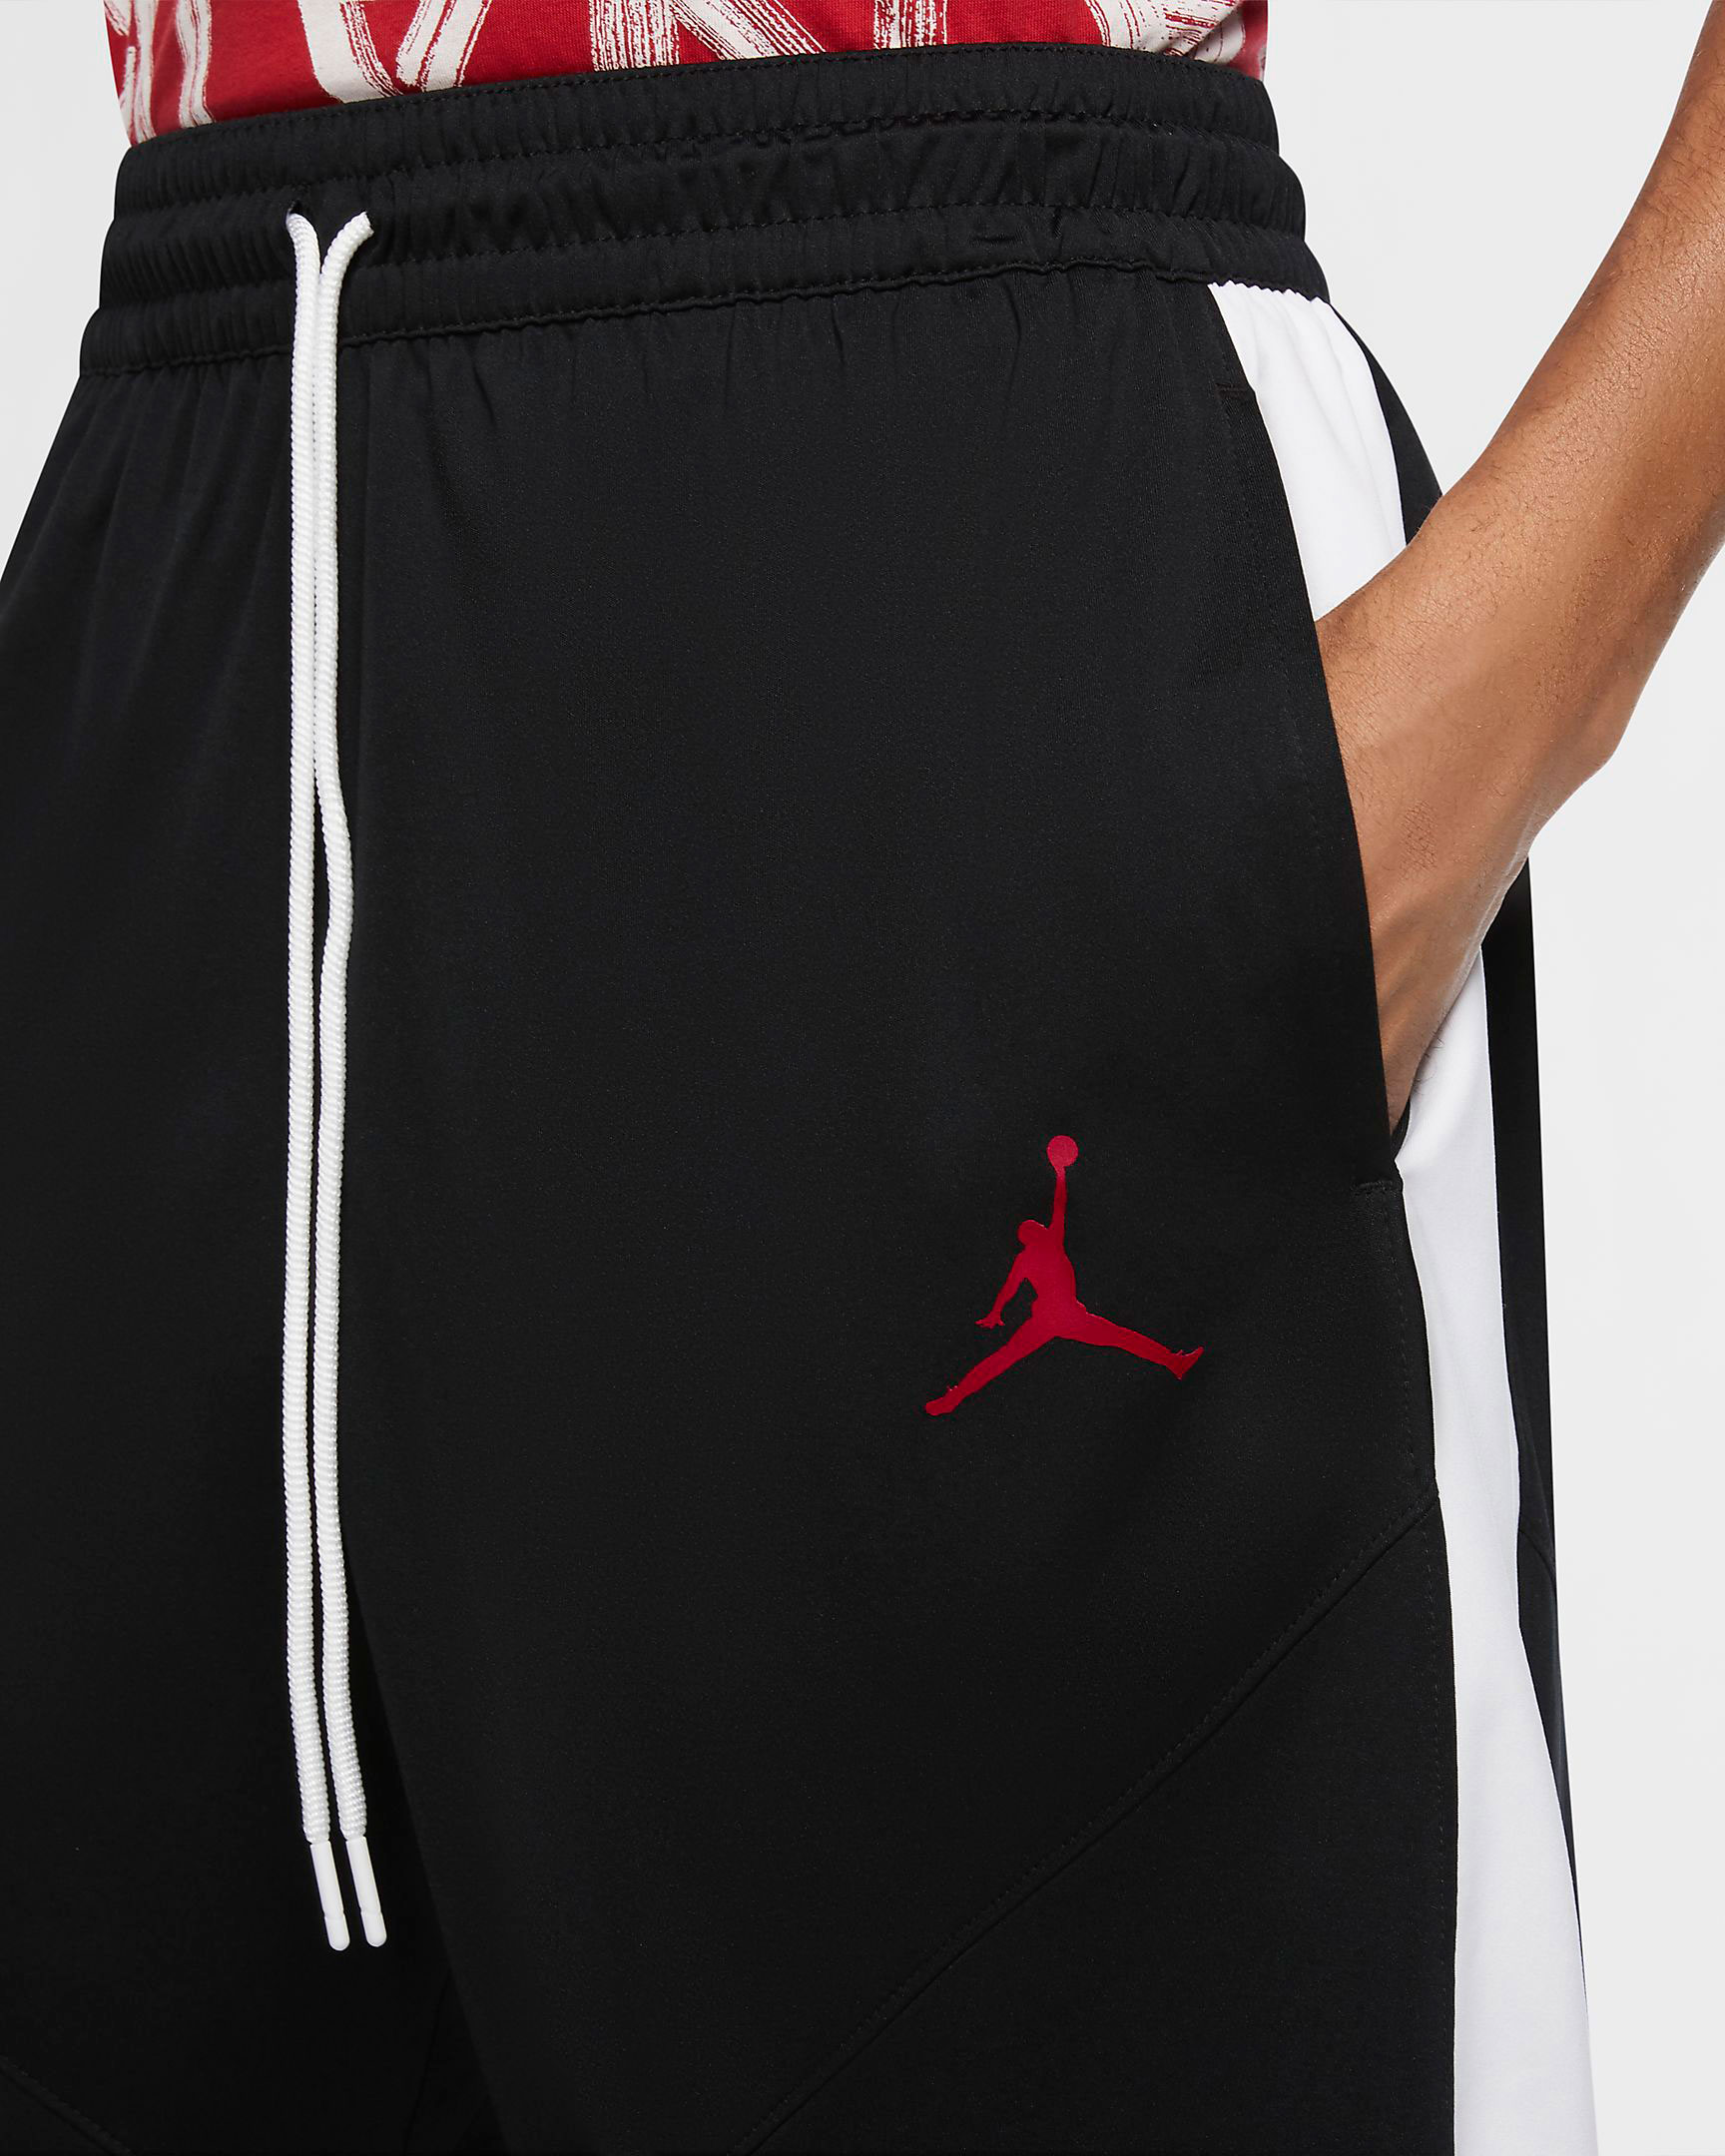 jordan-black-white-gym-red-basketball-shorts-2